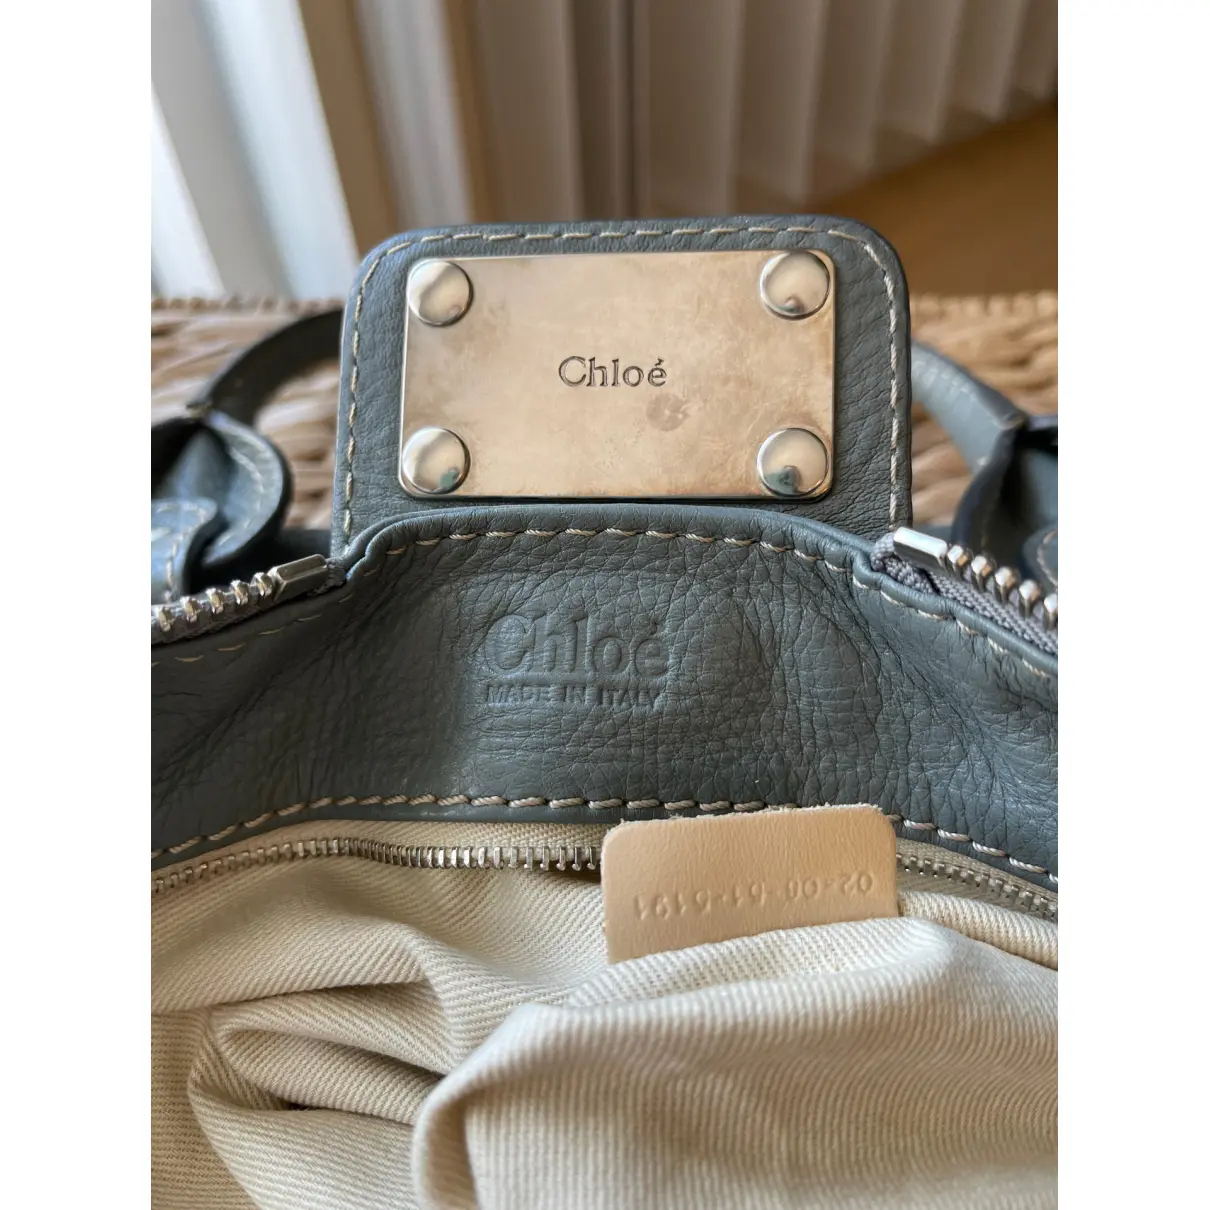 Buy Chloé Paddington leather tote online - Vintage